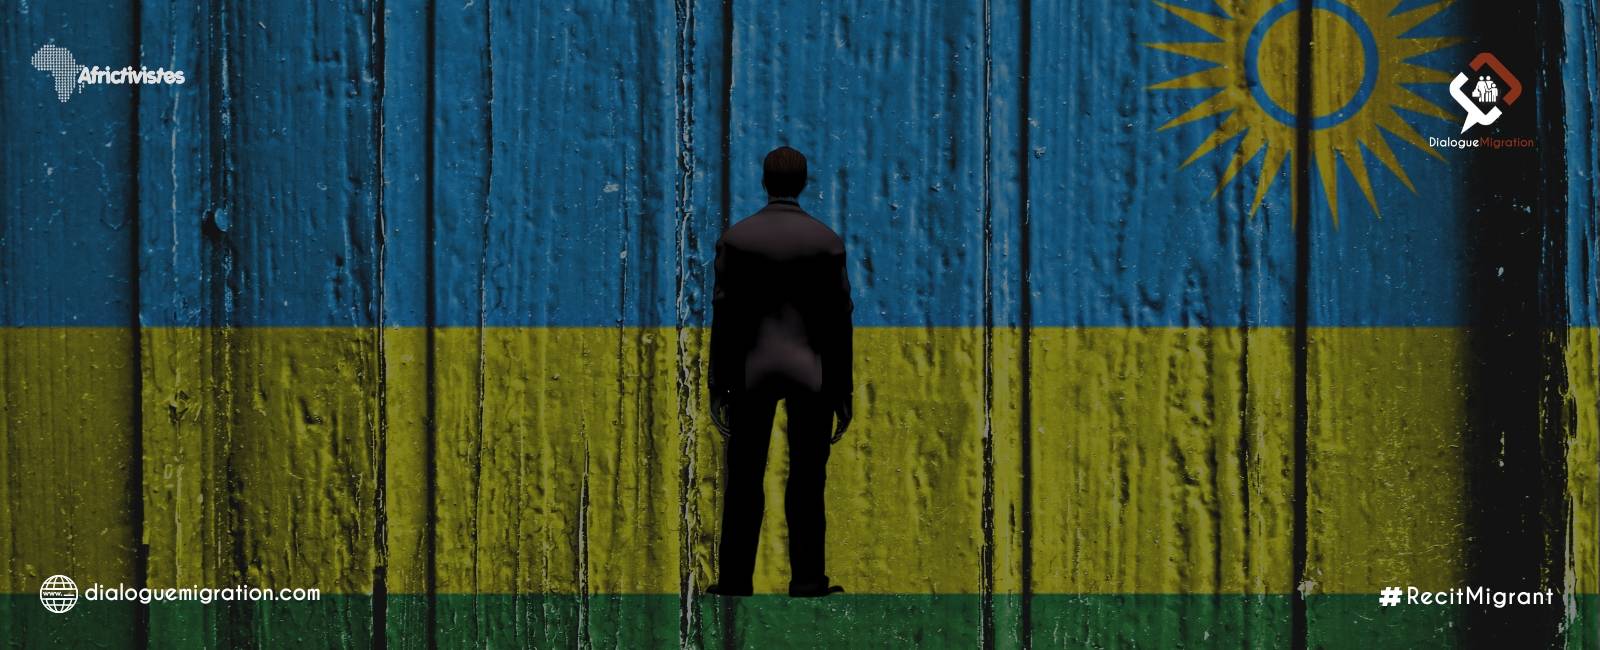 I don’t have anyone left… I’m alone in the world, Rwandan refugee says